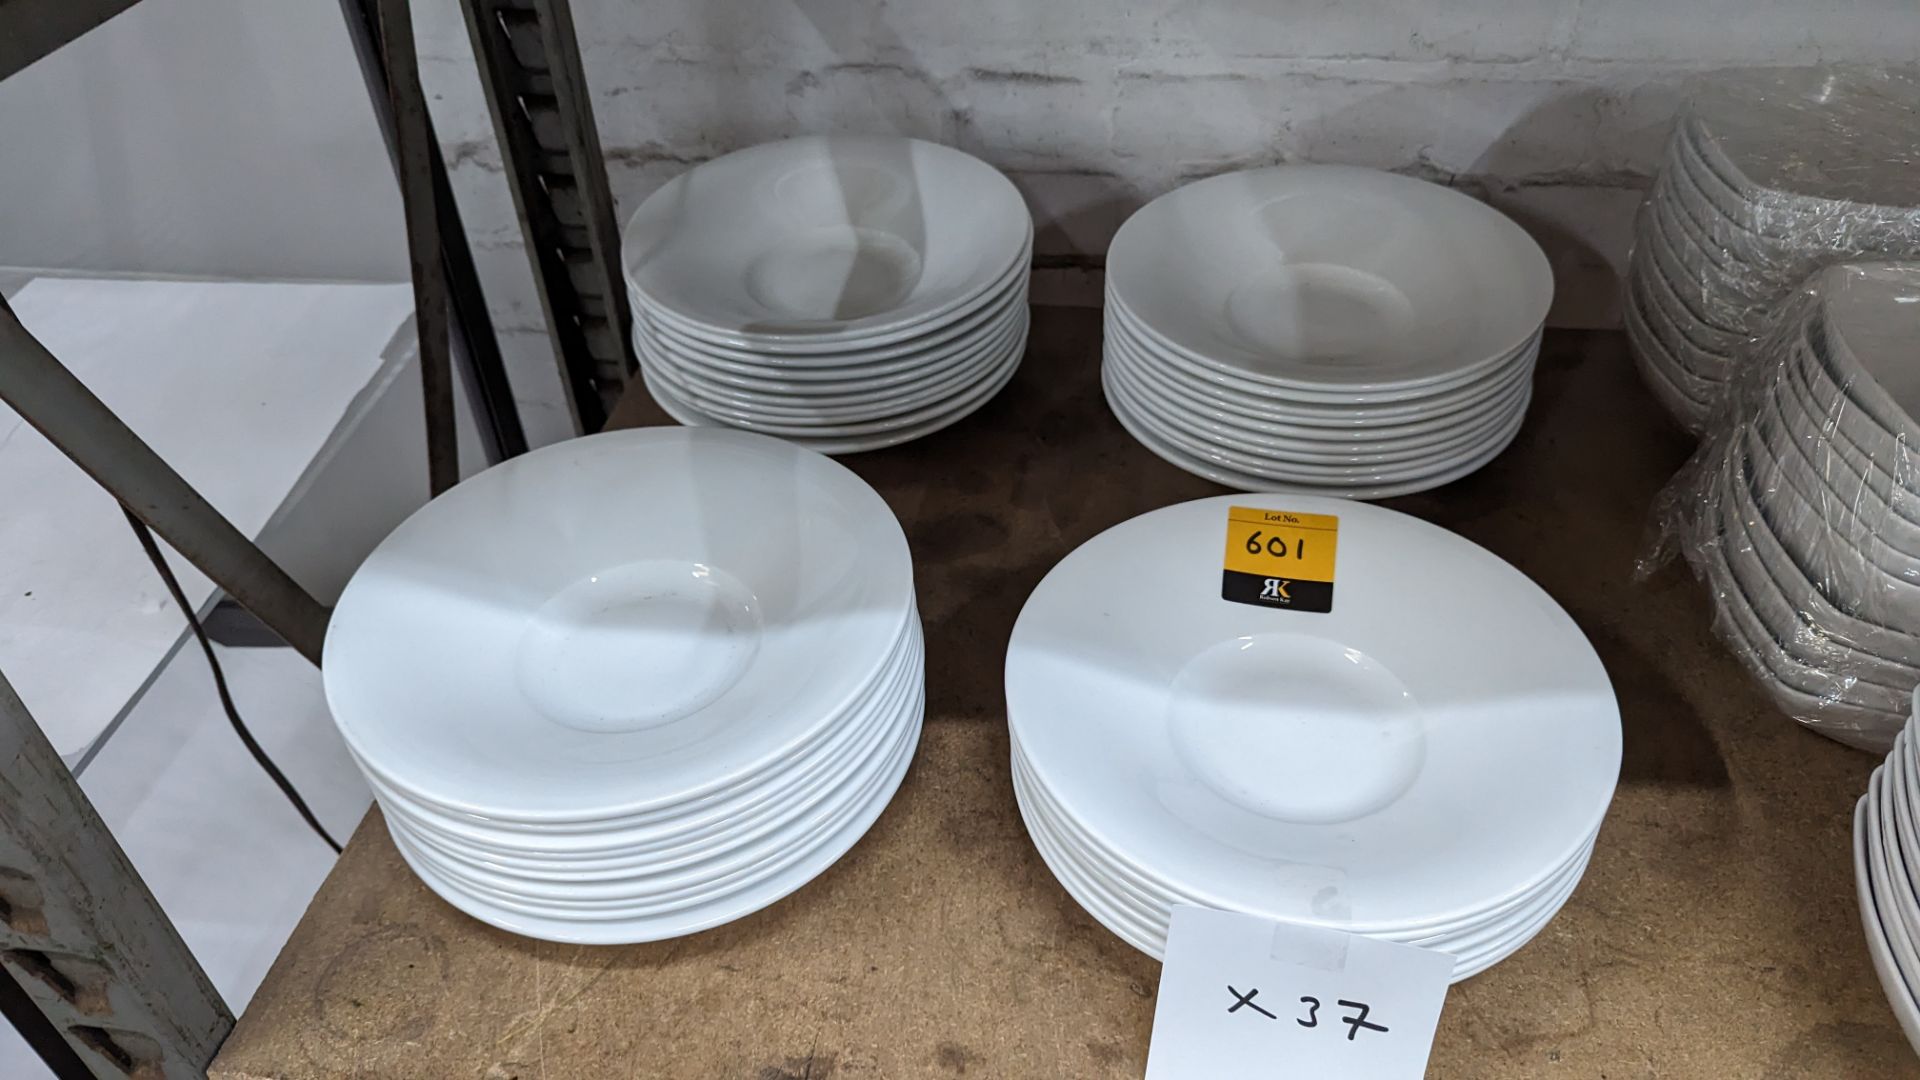 37 off Art de Cuisine 240mm bowls with recessed centres